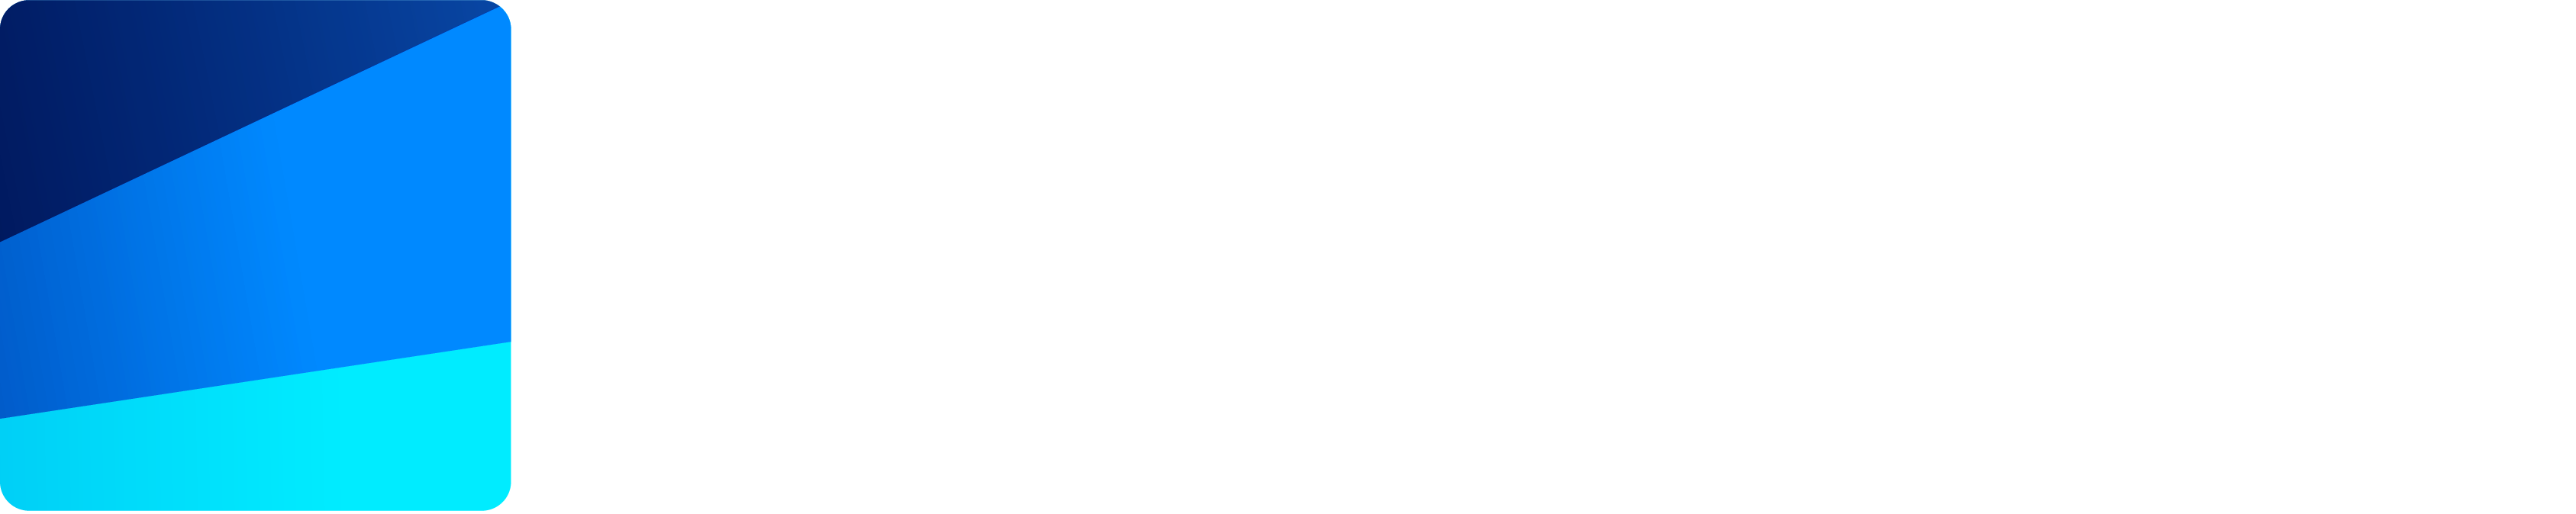 Hanson Wade Logo